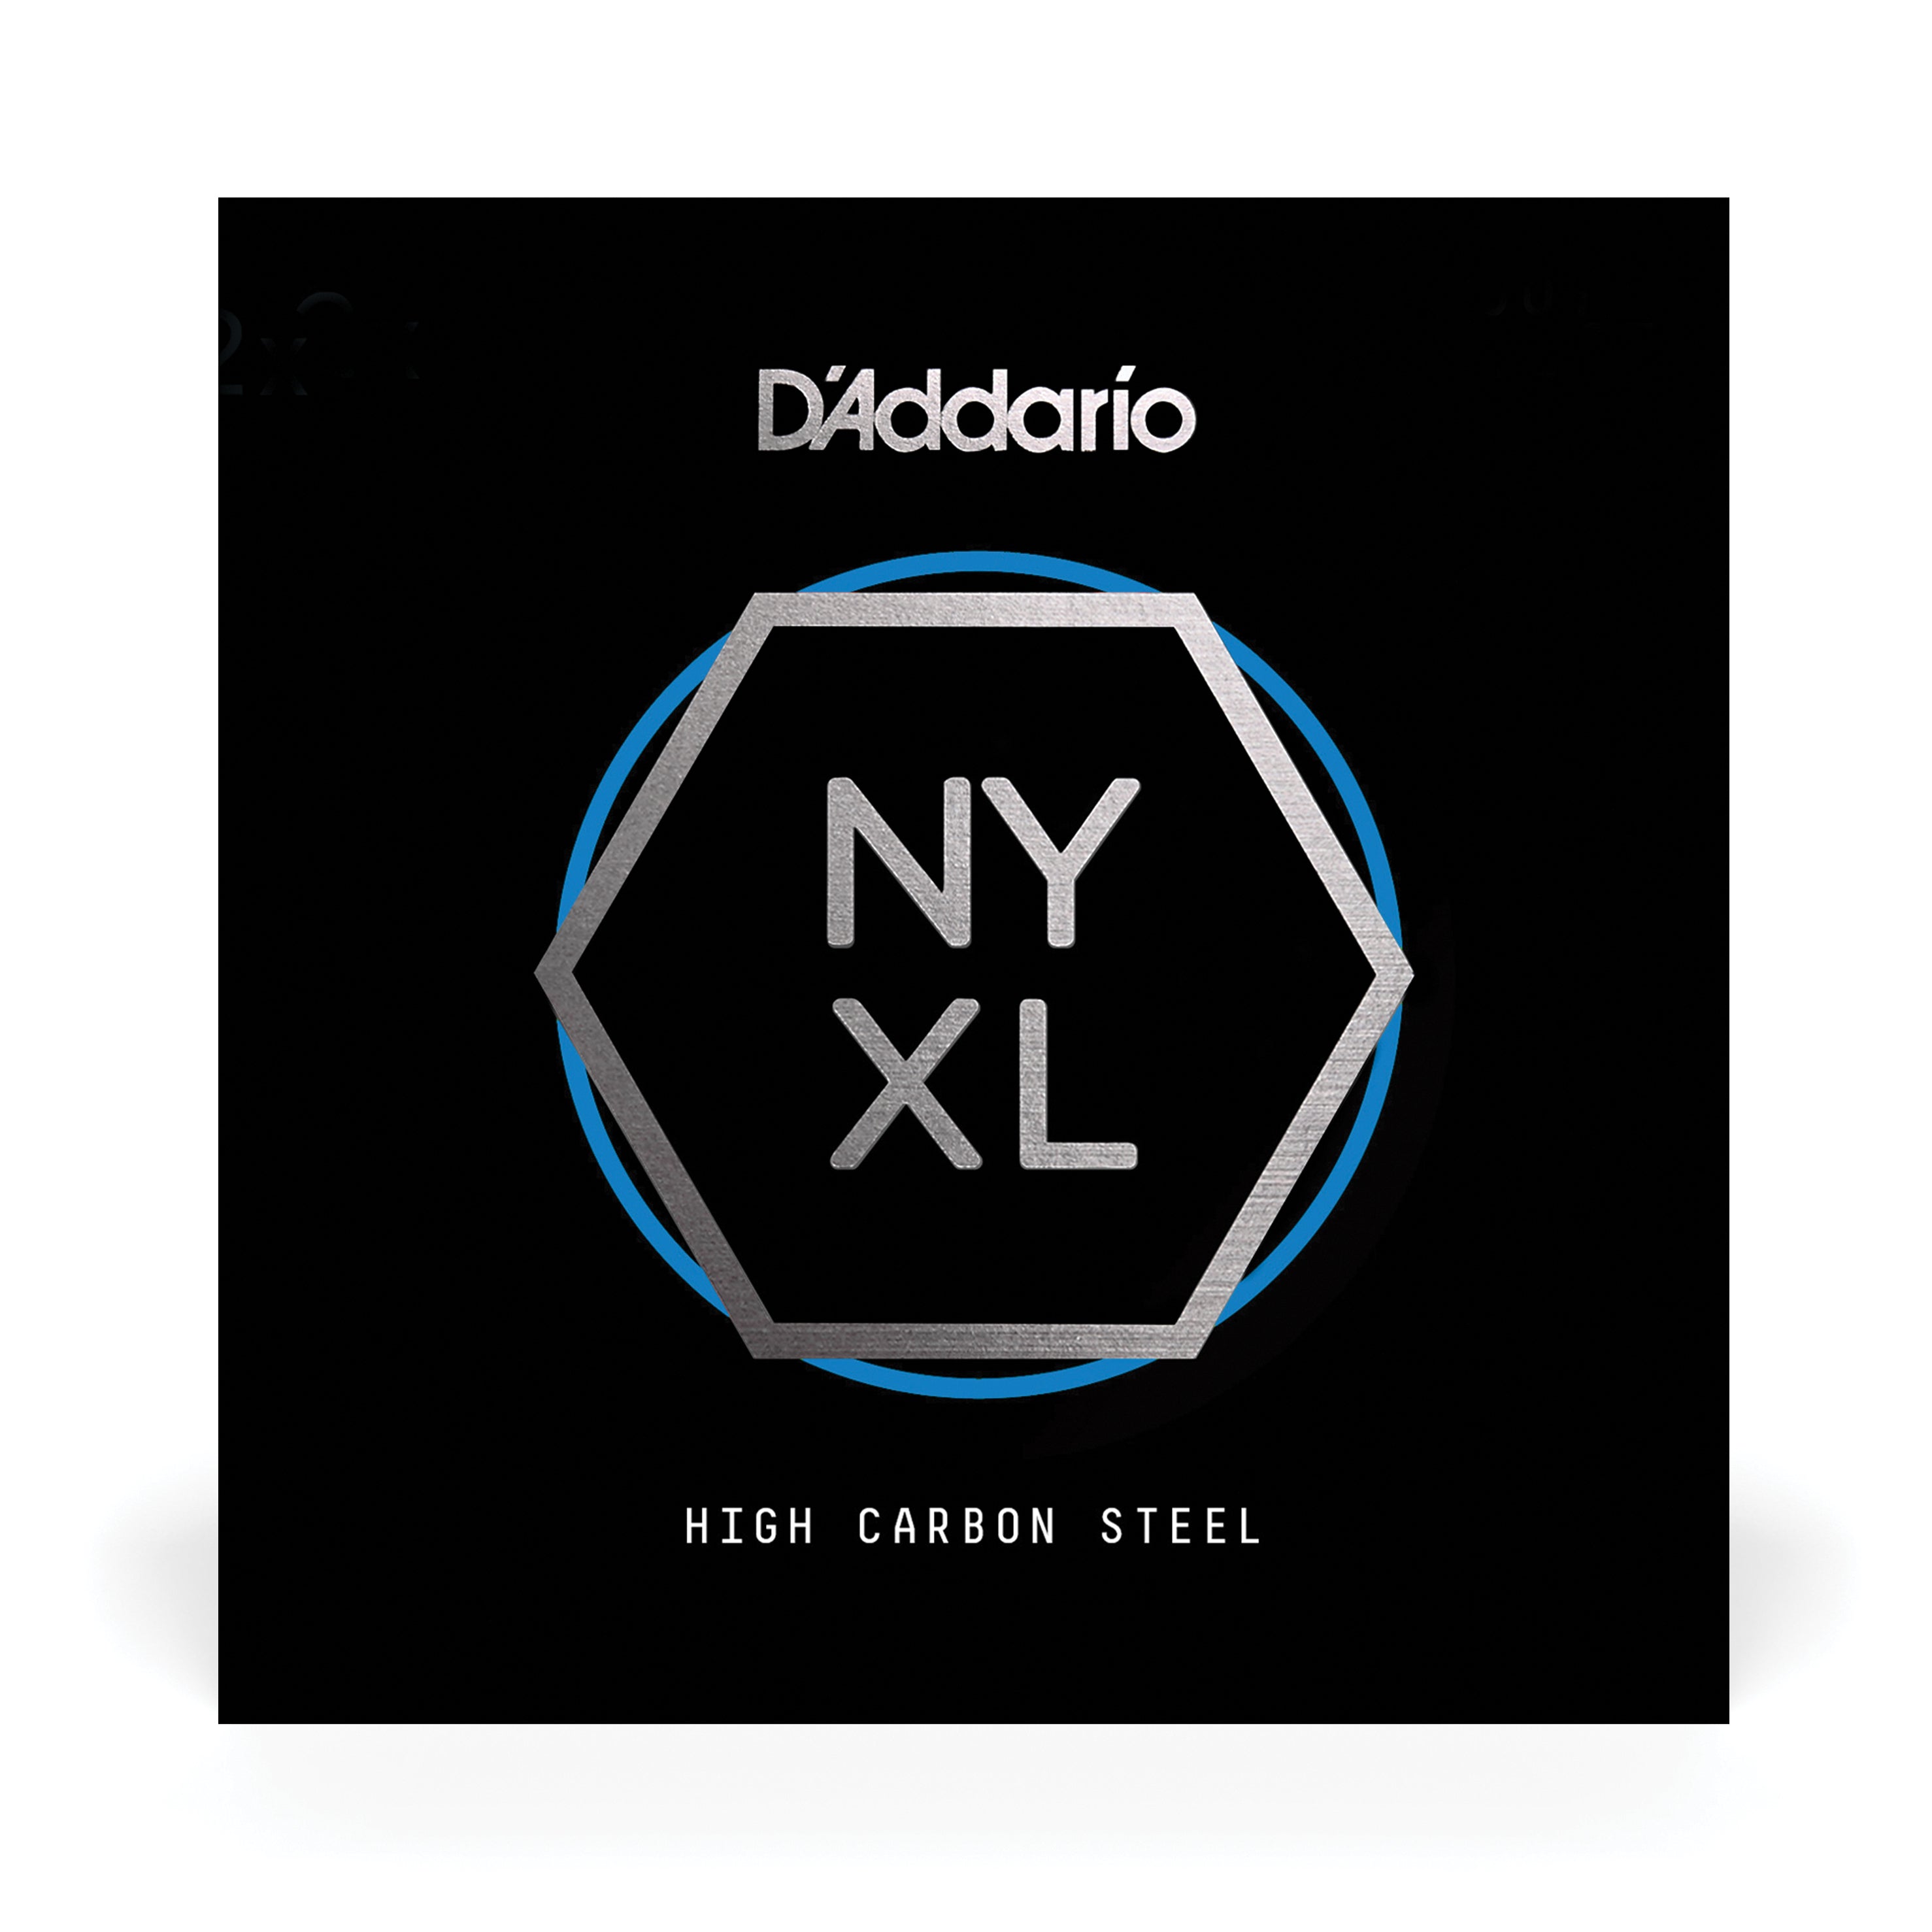 D'Addario NYXL High Carbon Steel .013 Single Guitar String